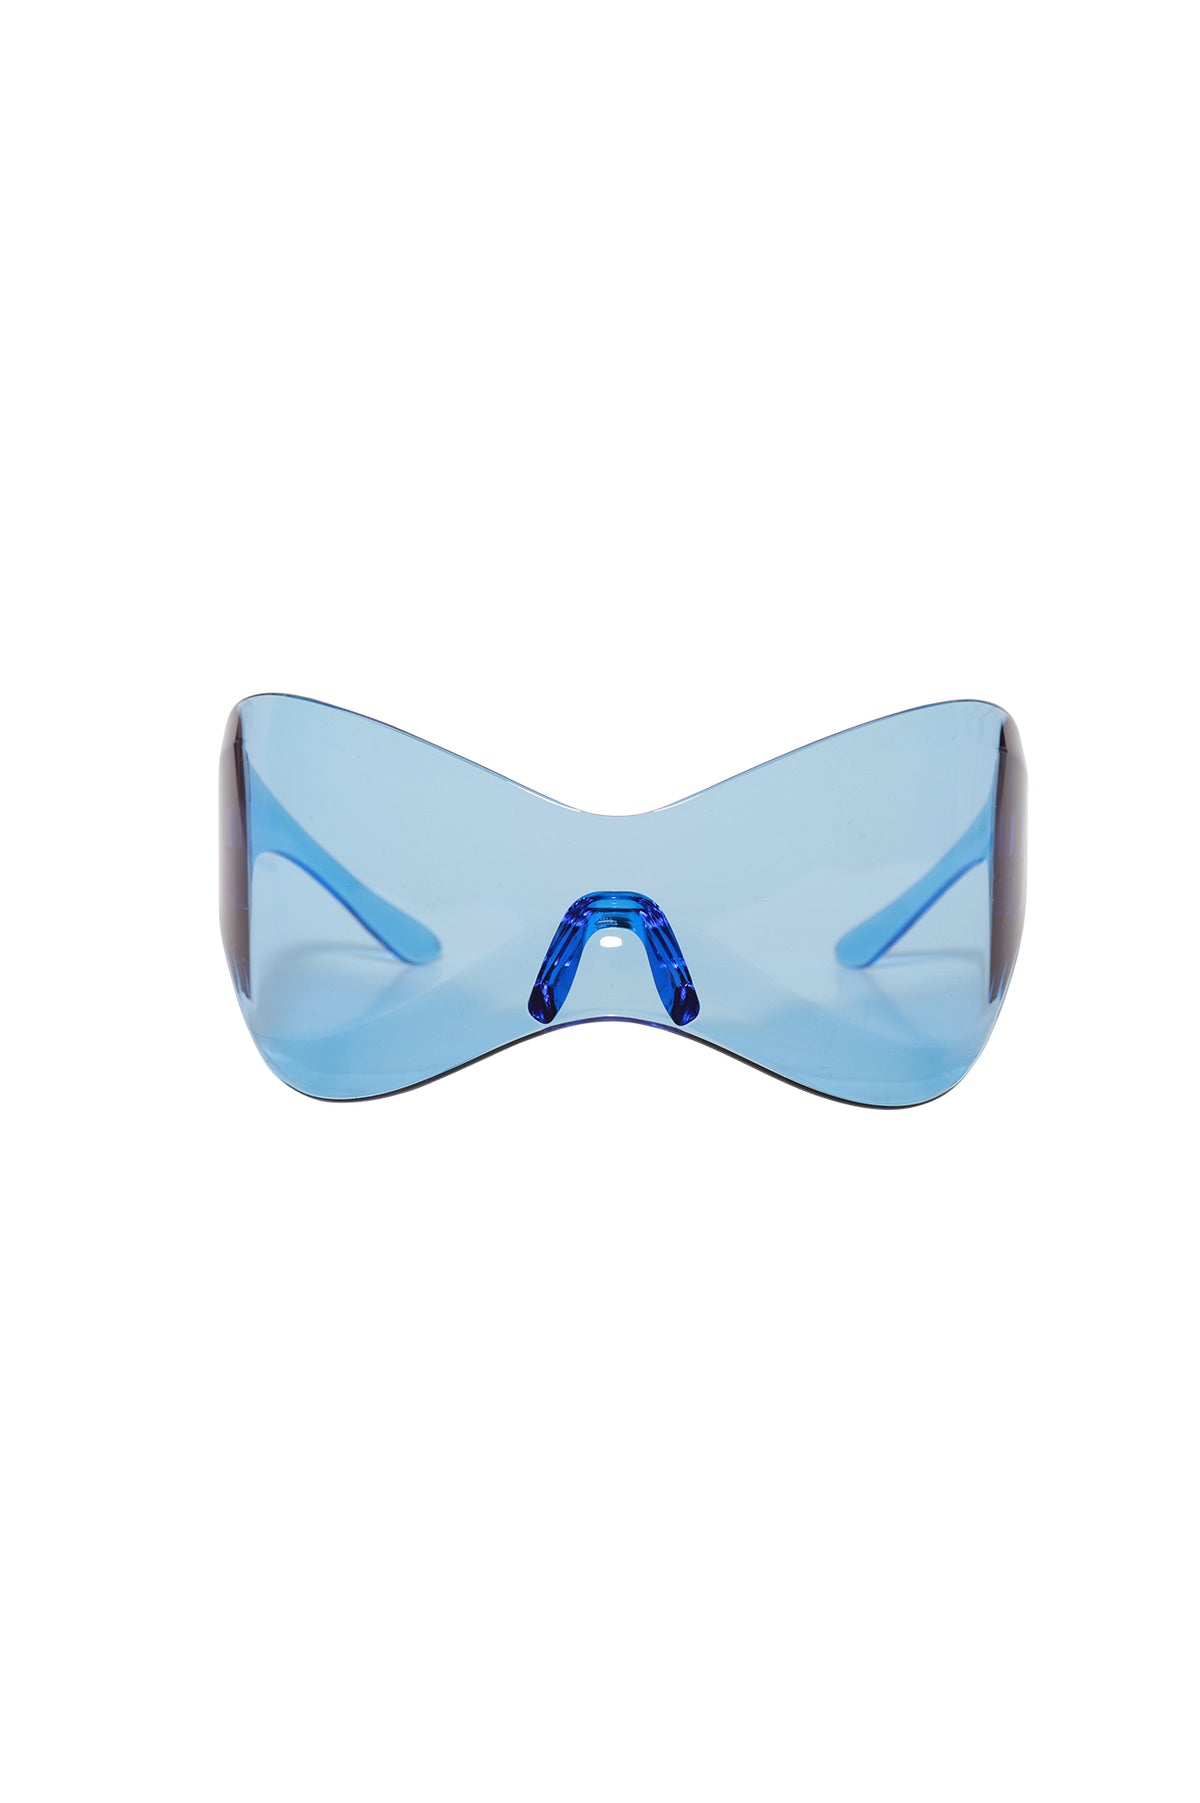 
              Final Score Curved Shield Sunglasses - Blue - Swank A Posh
            